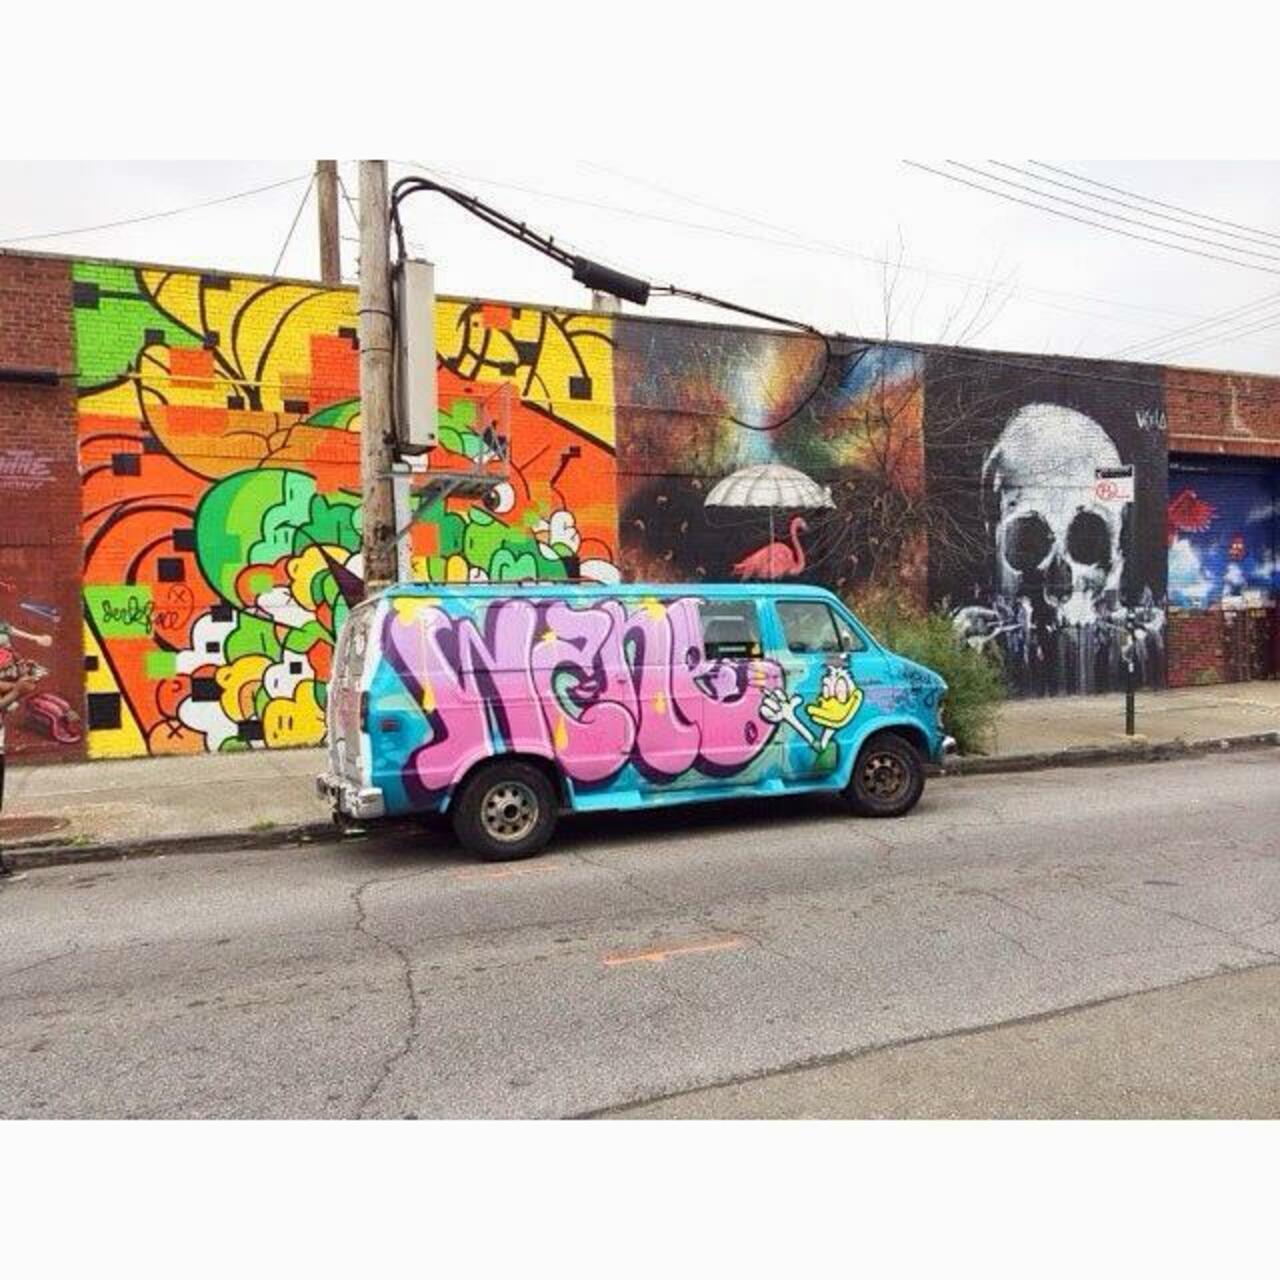 I saw this van in #brooklyn . Does anyone know of the #artist ? #streetart #graffiti http://t.co/lI63vFB68v